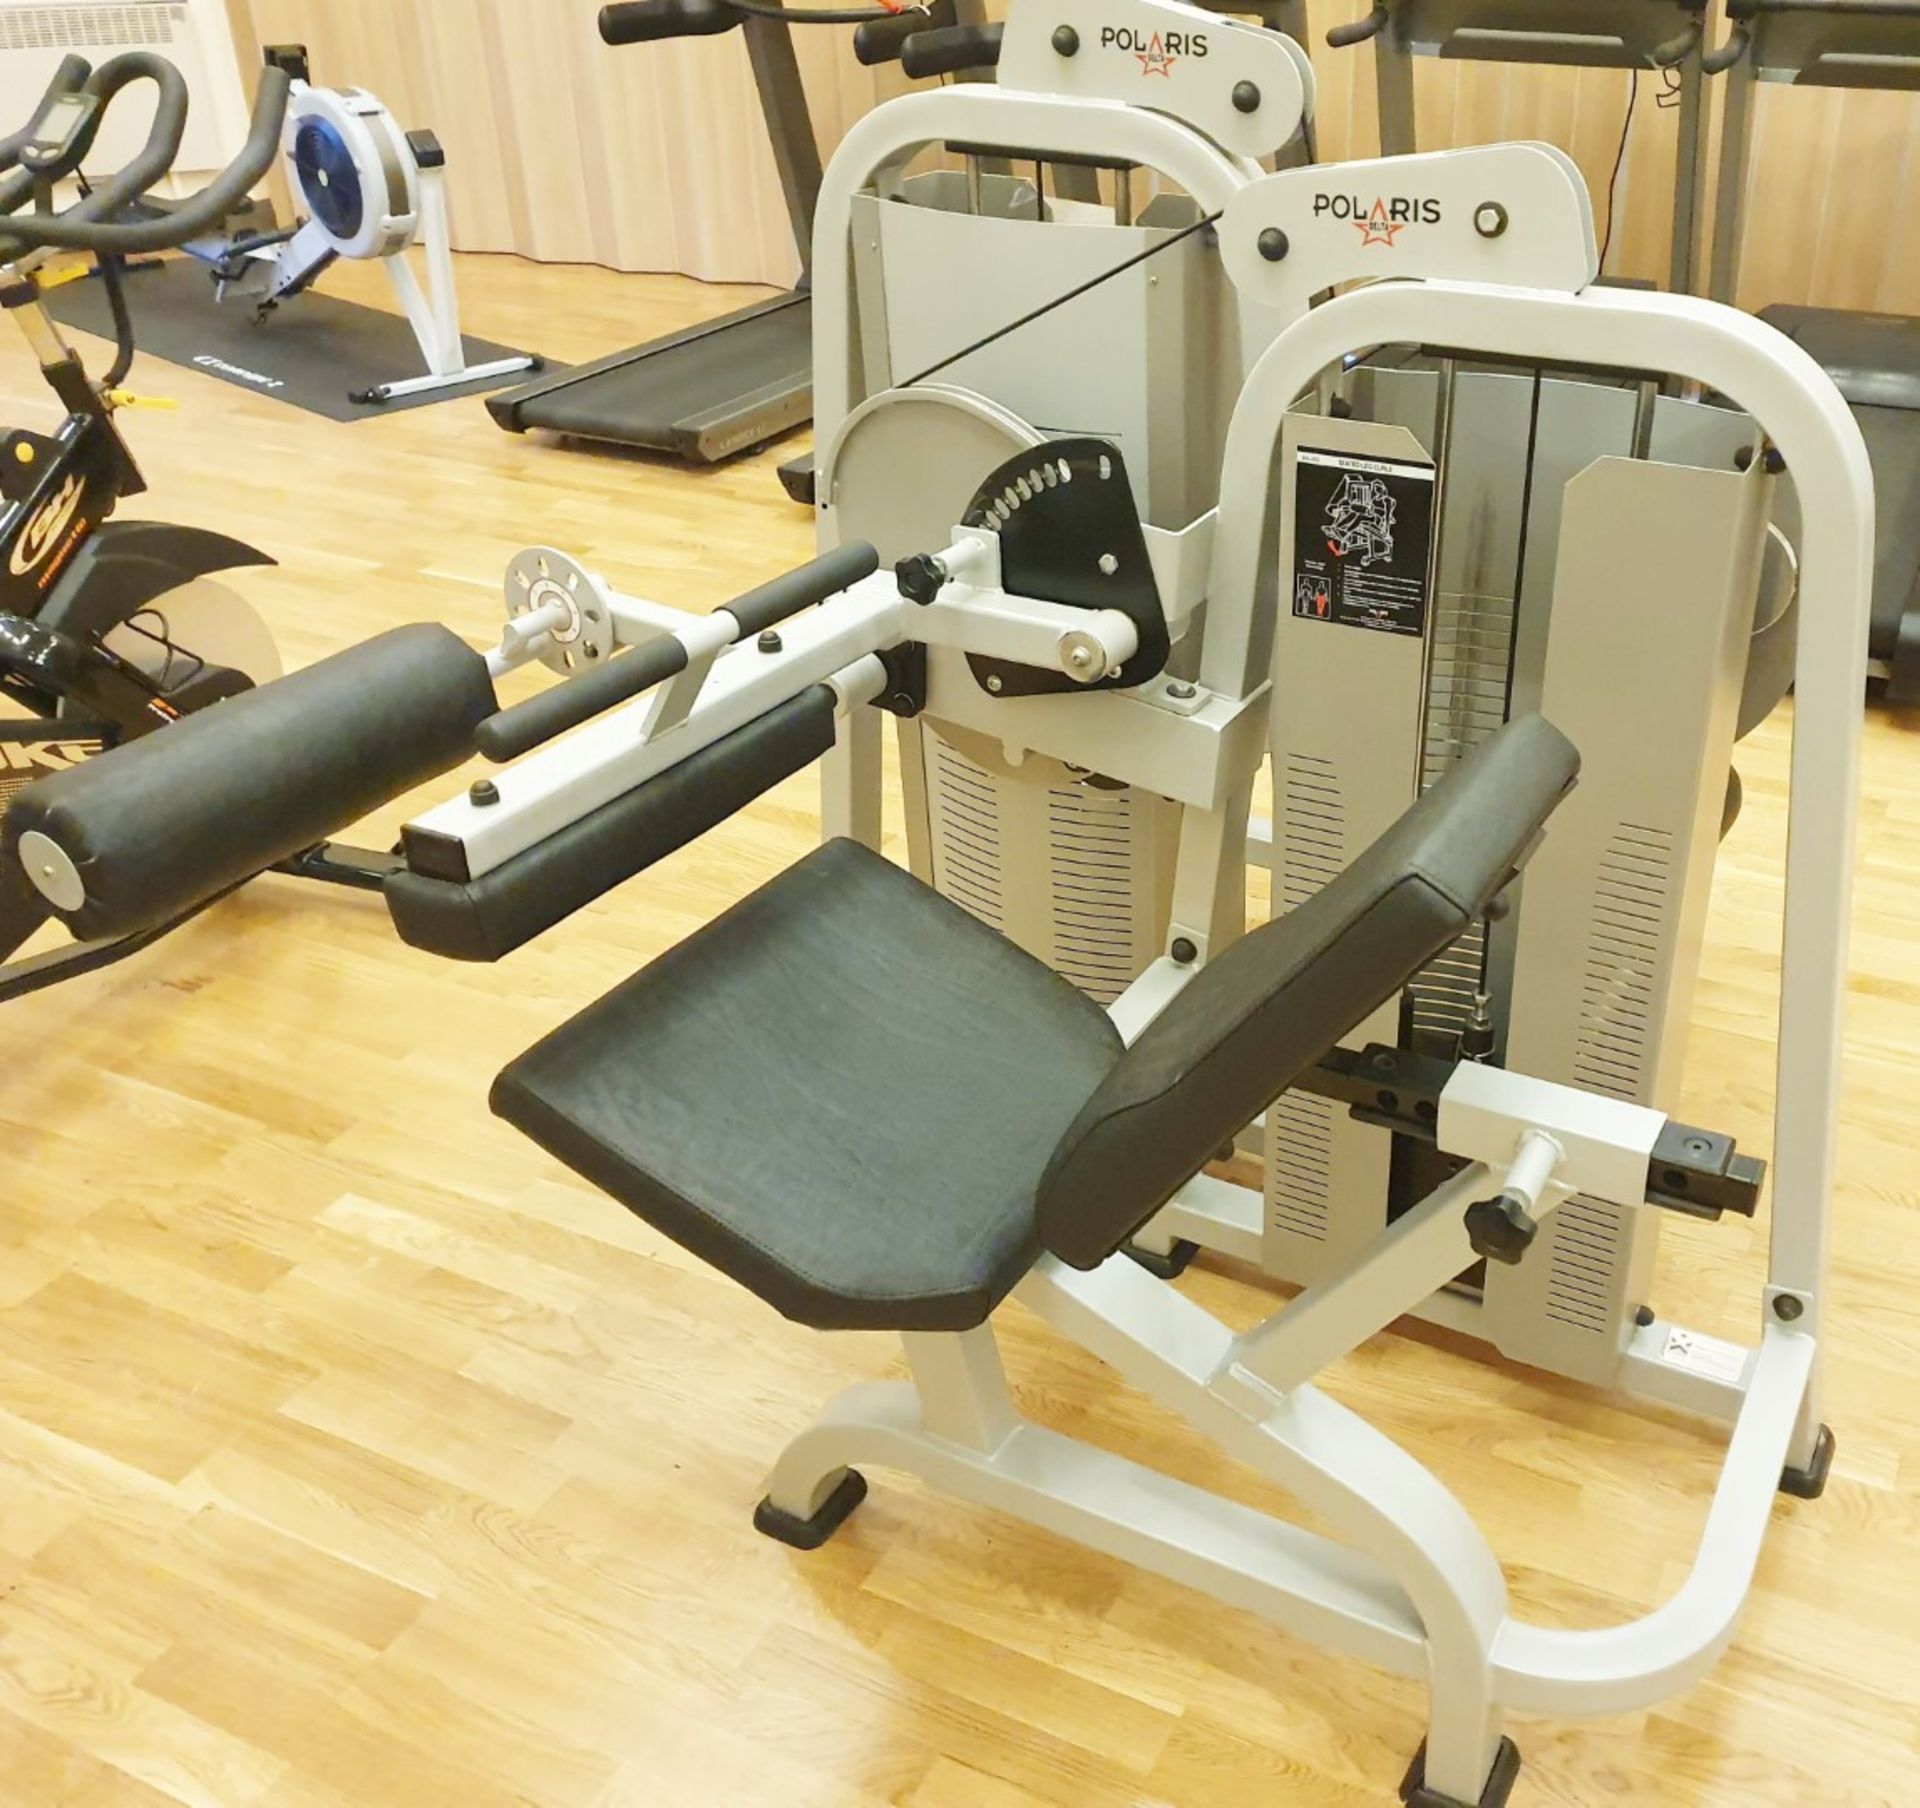 1 x Polaris DE-202 Seated Leg Curl Commercial Gym Machine - CL552 - Location: West Yorkshire This - Image 4 of 7